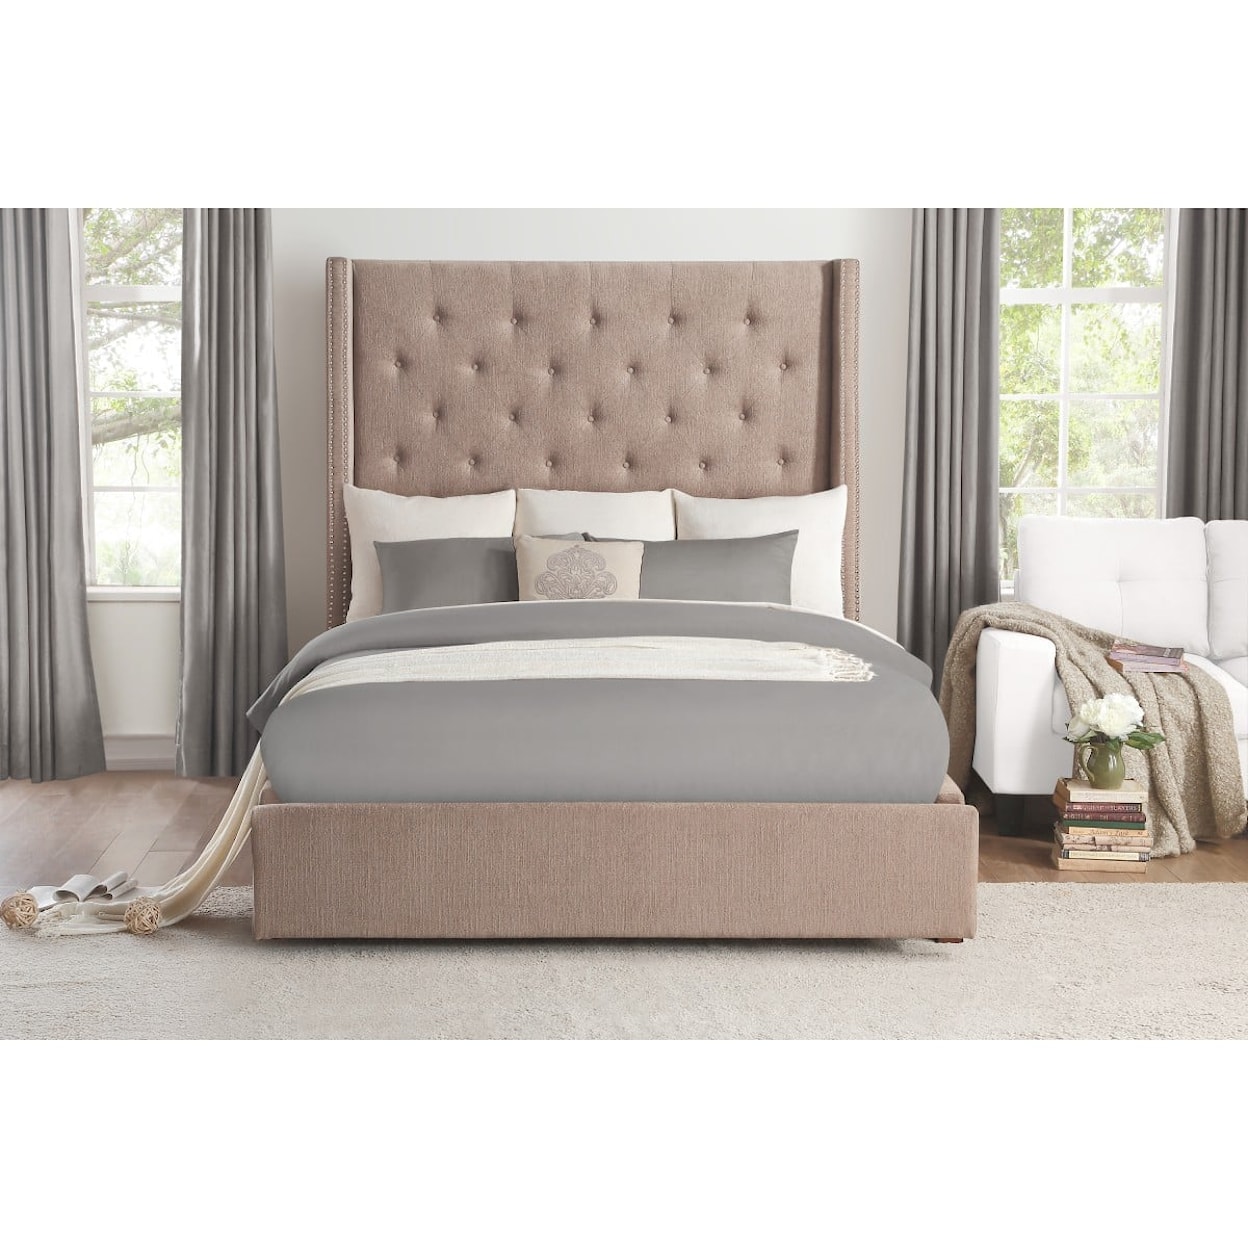 Homelegance Furniture Fairborn Full Bed  Bed